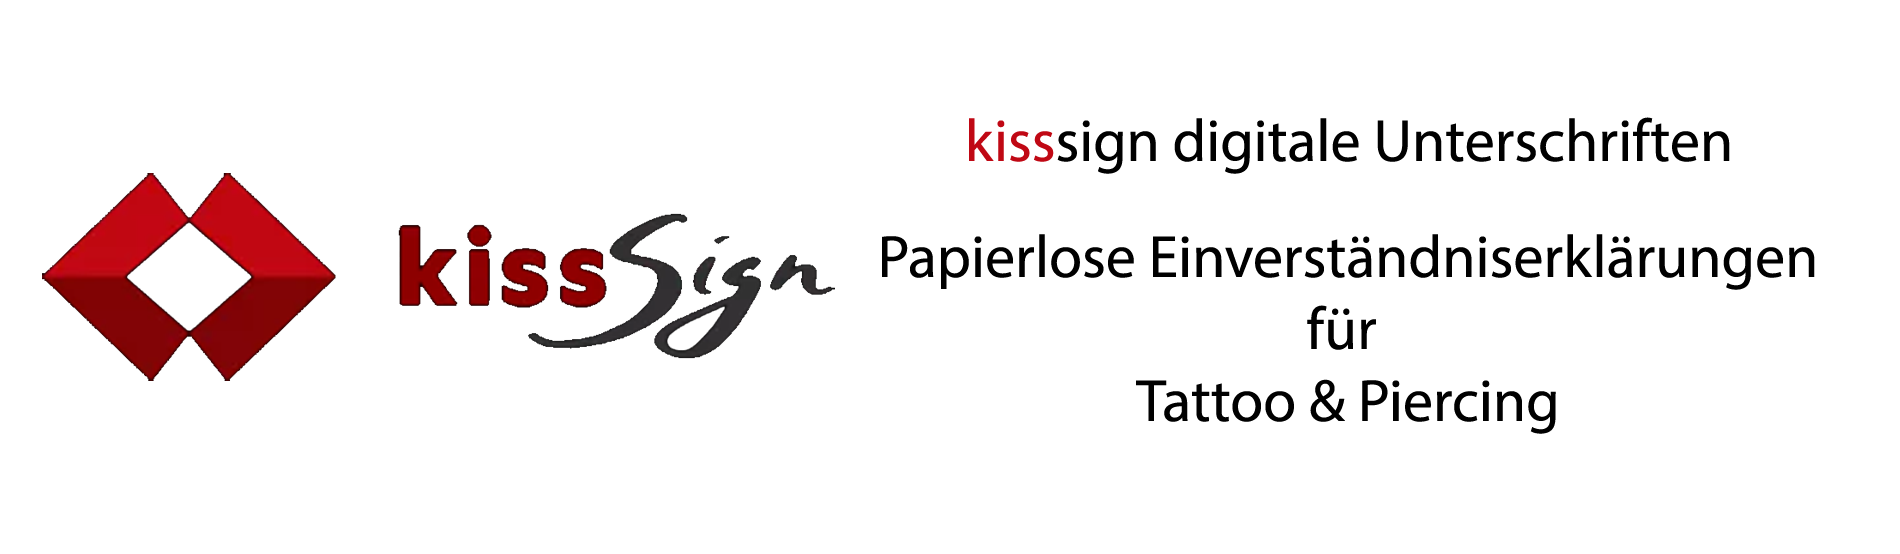 Kisssign